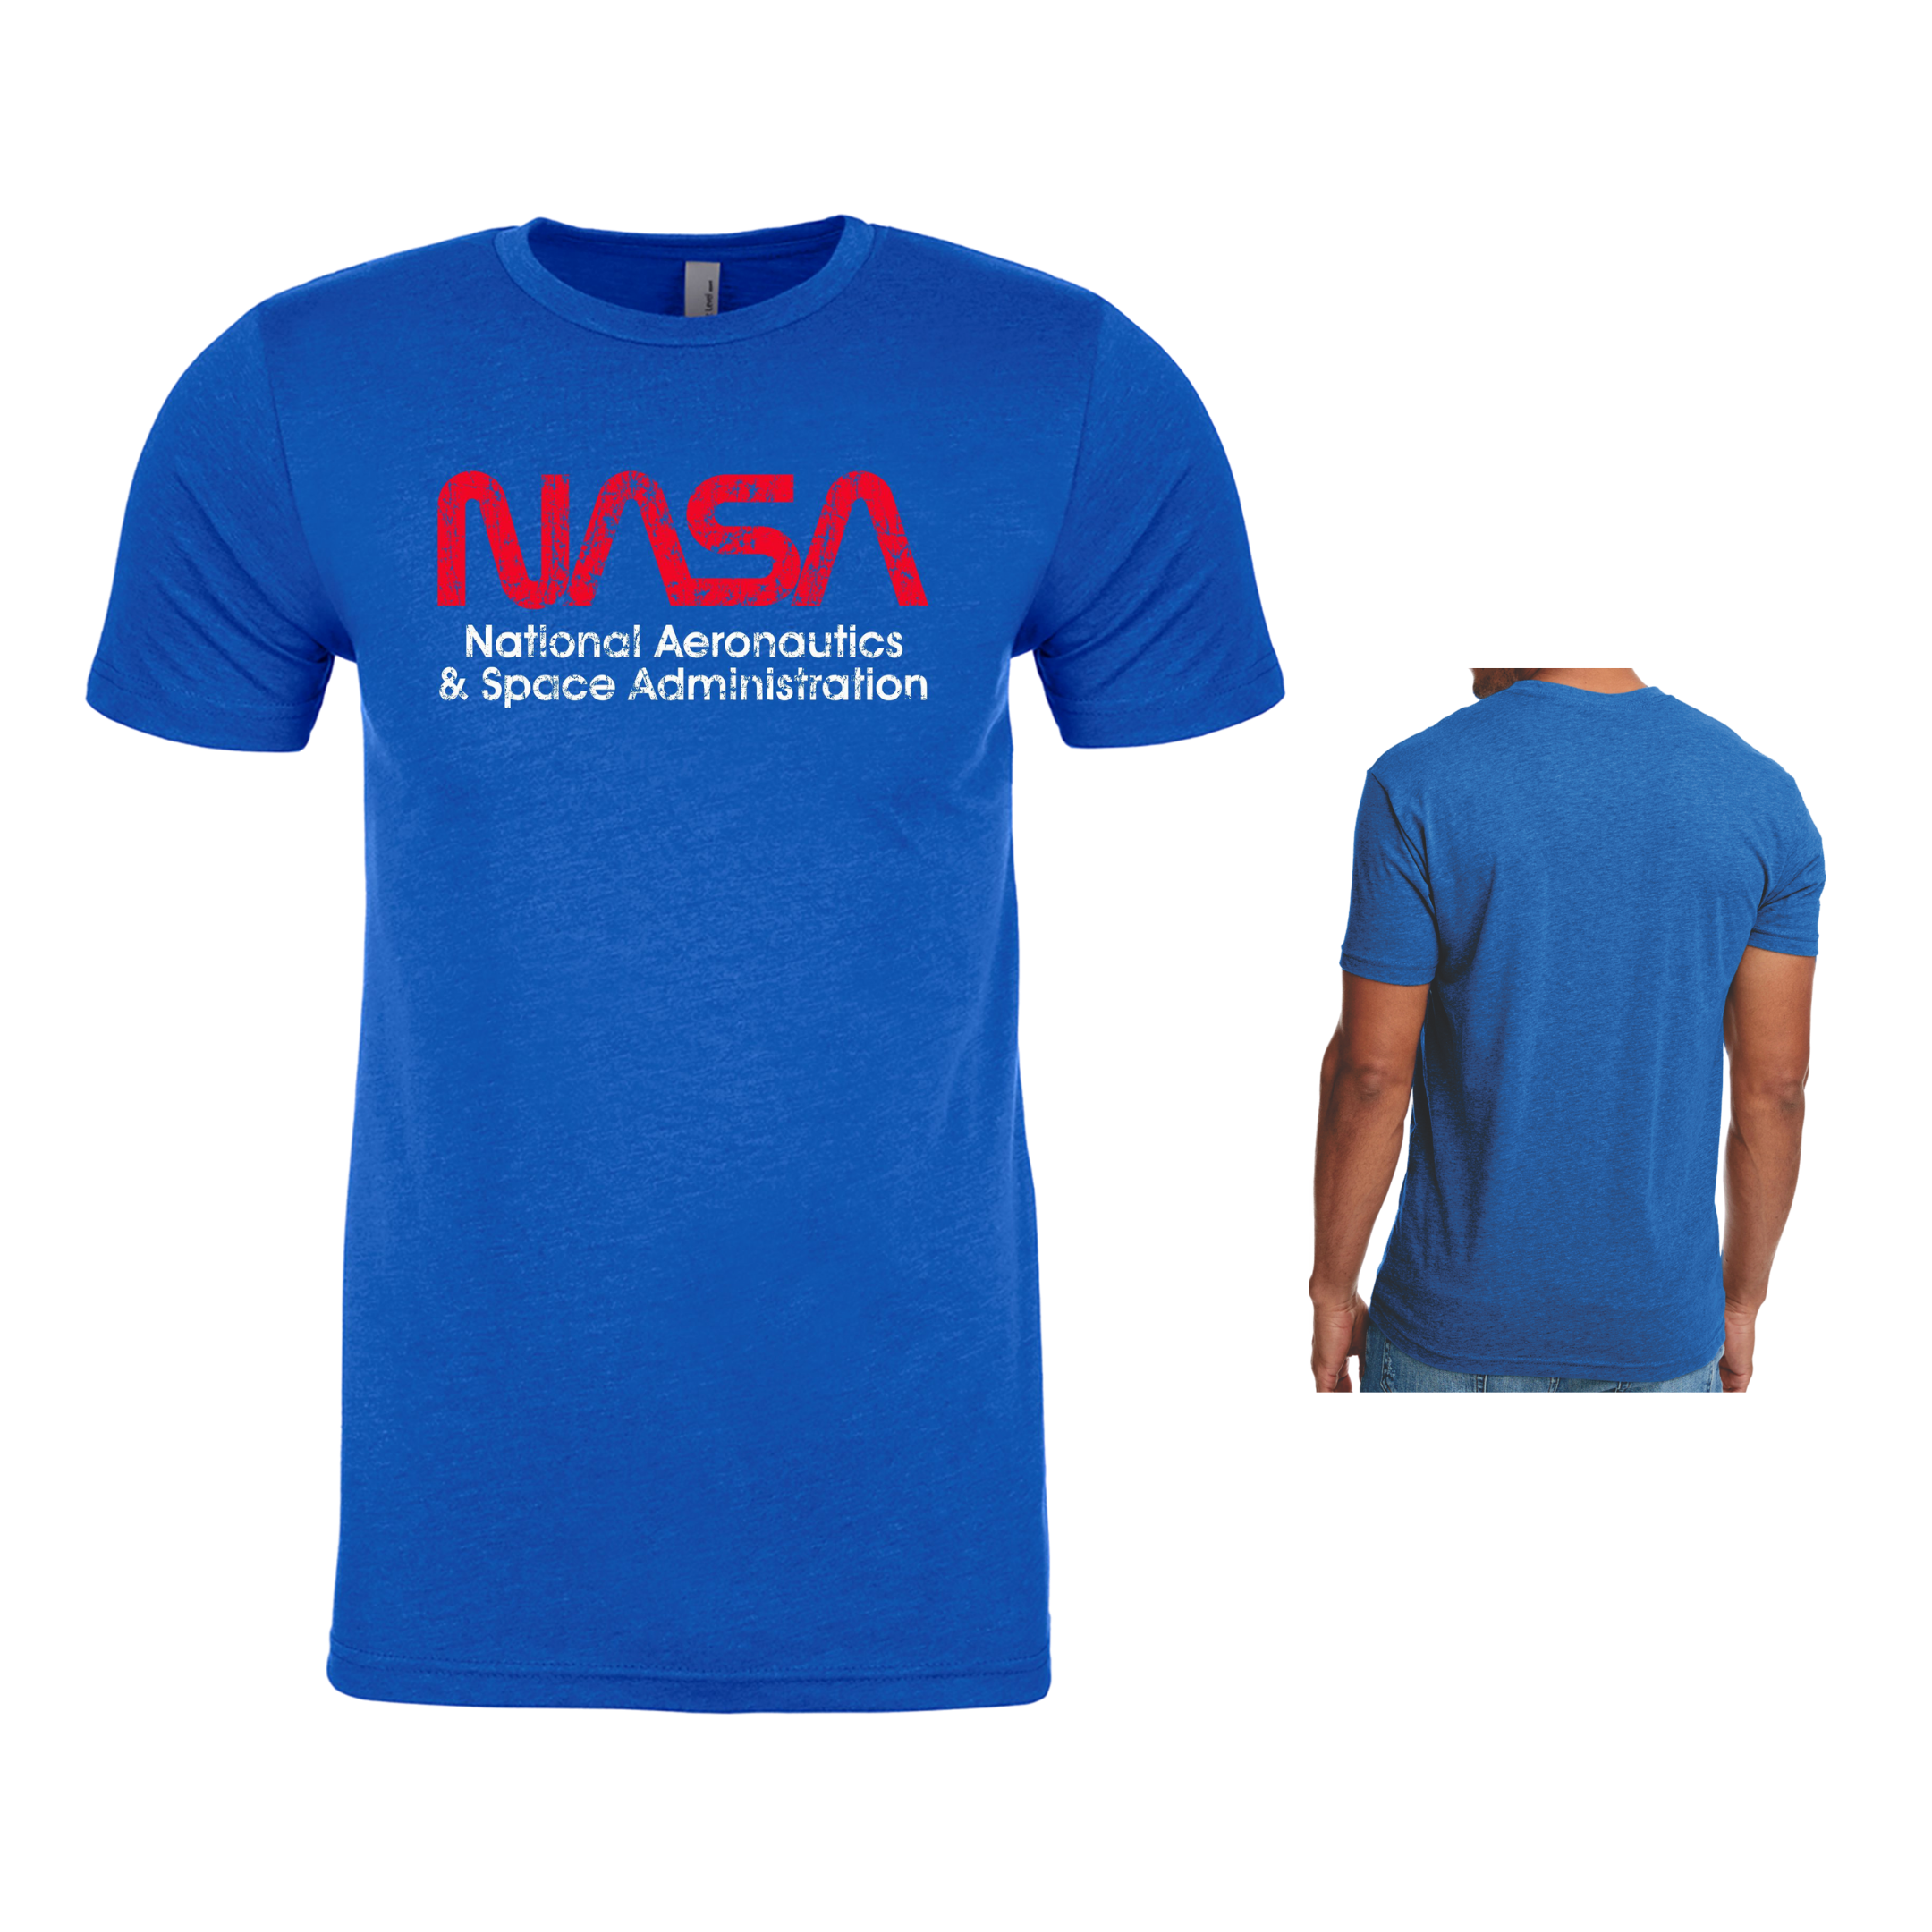 NASA Worm Acronym Distressed T-Shirt - Short or Long Sleeve